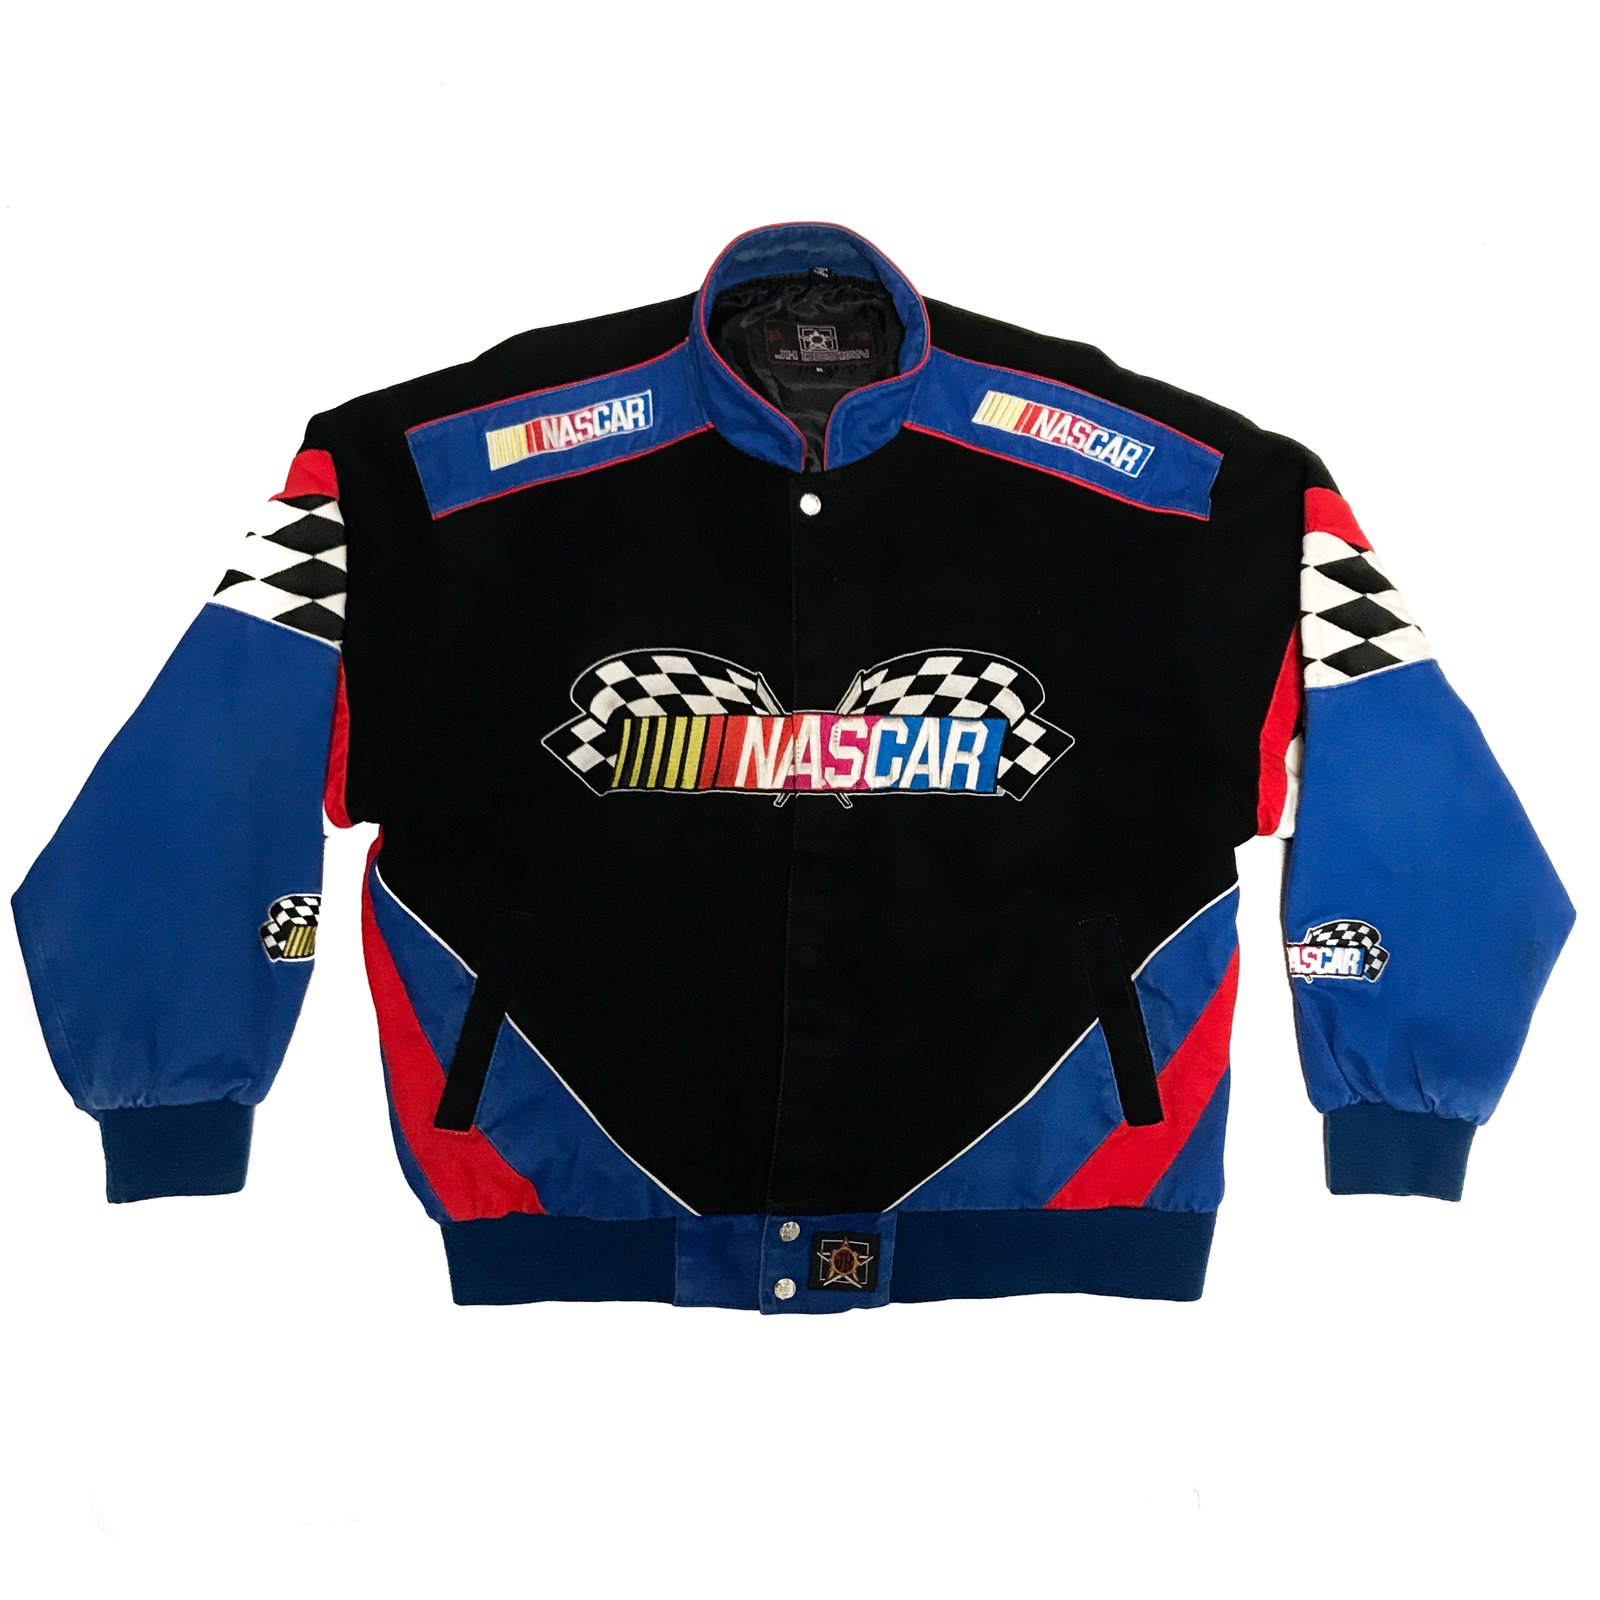 Vintage NASCAR Racing Jacket - 1990's | munka